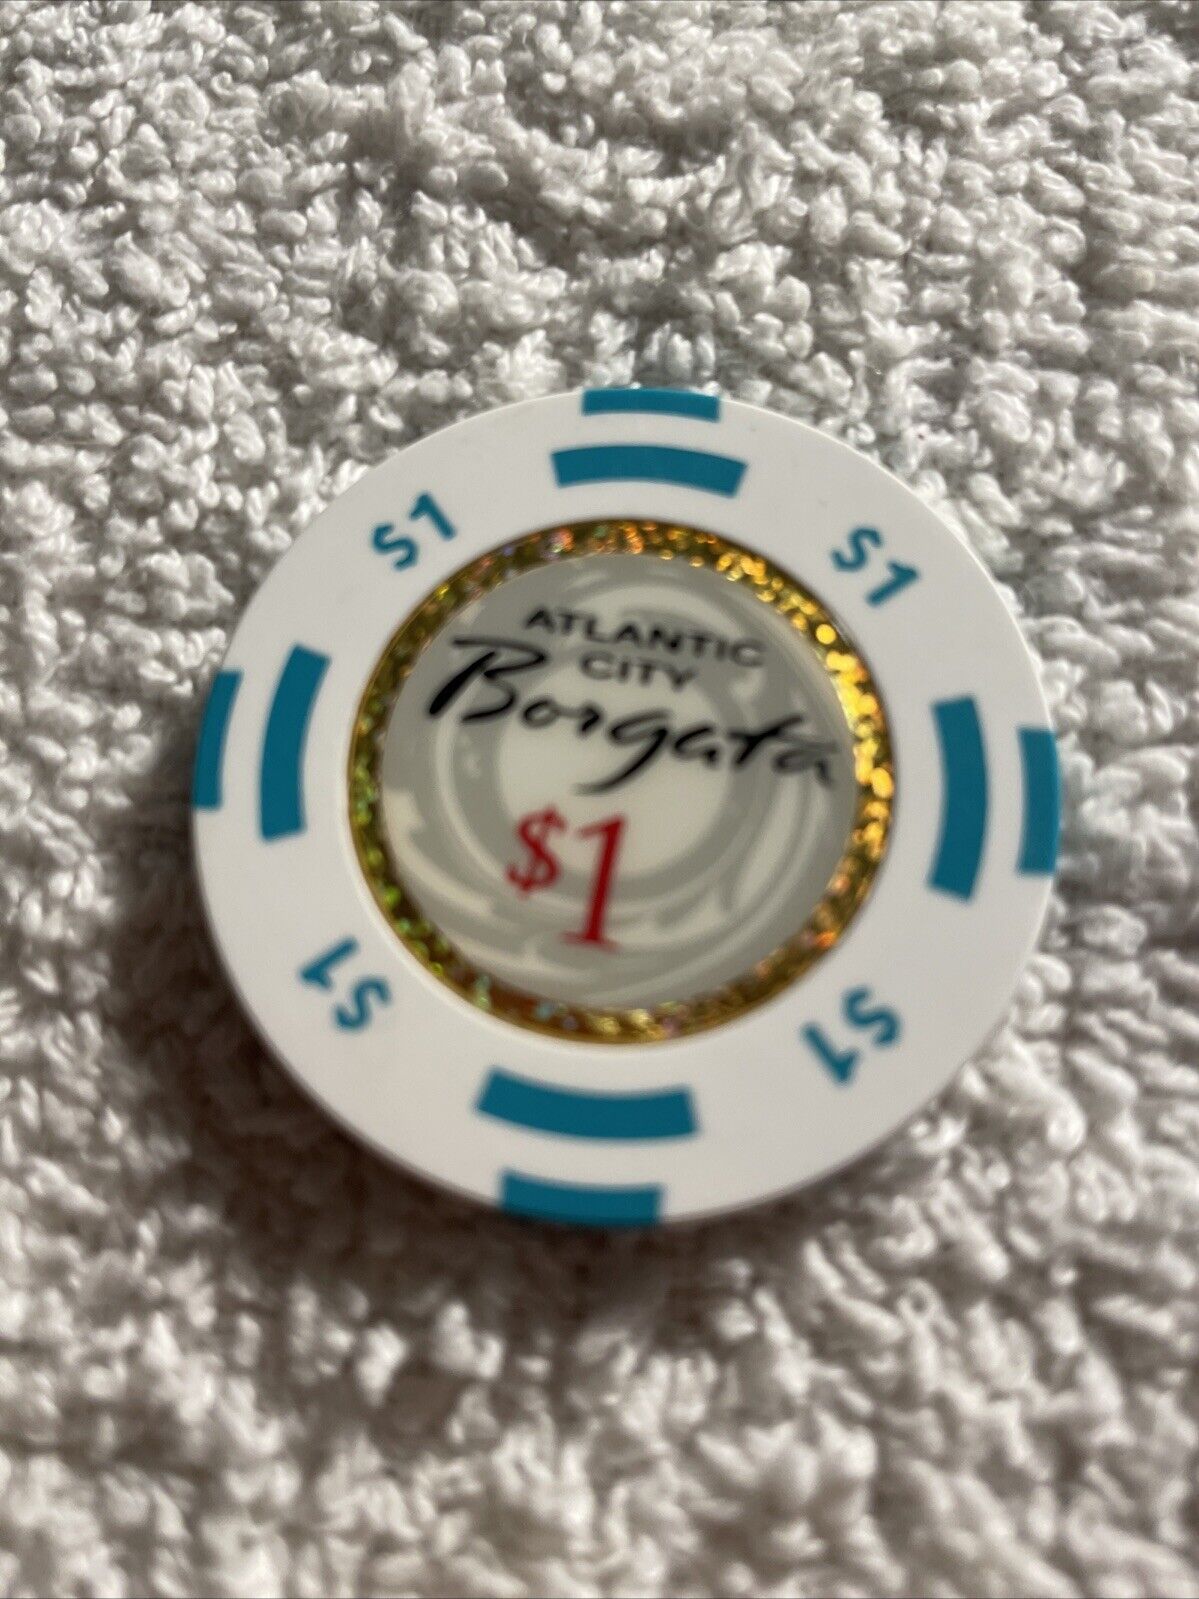 $1 Borgata Atlantic City Casino Chip